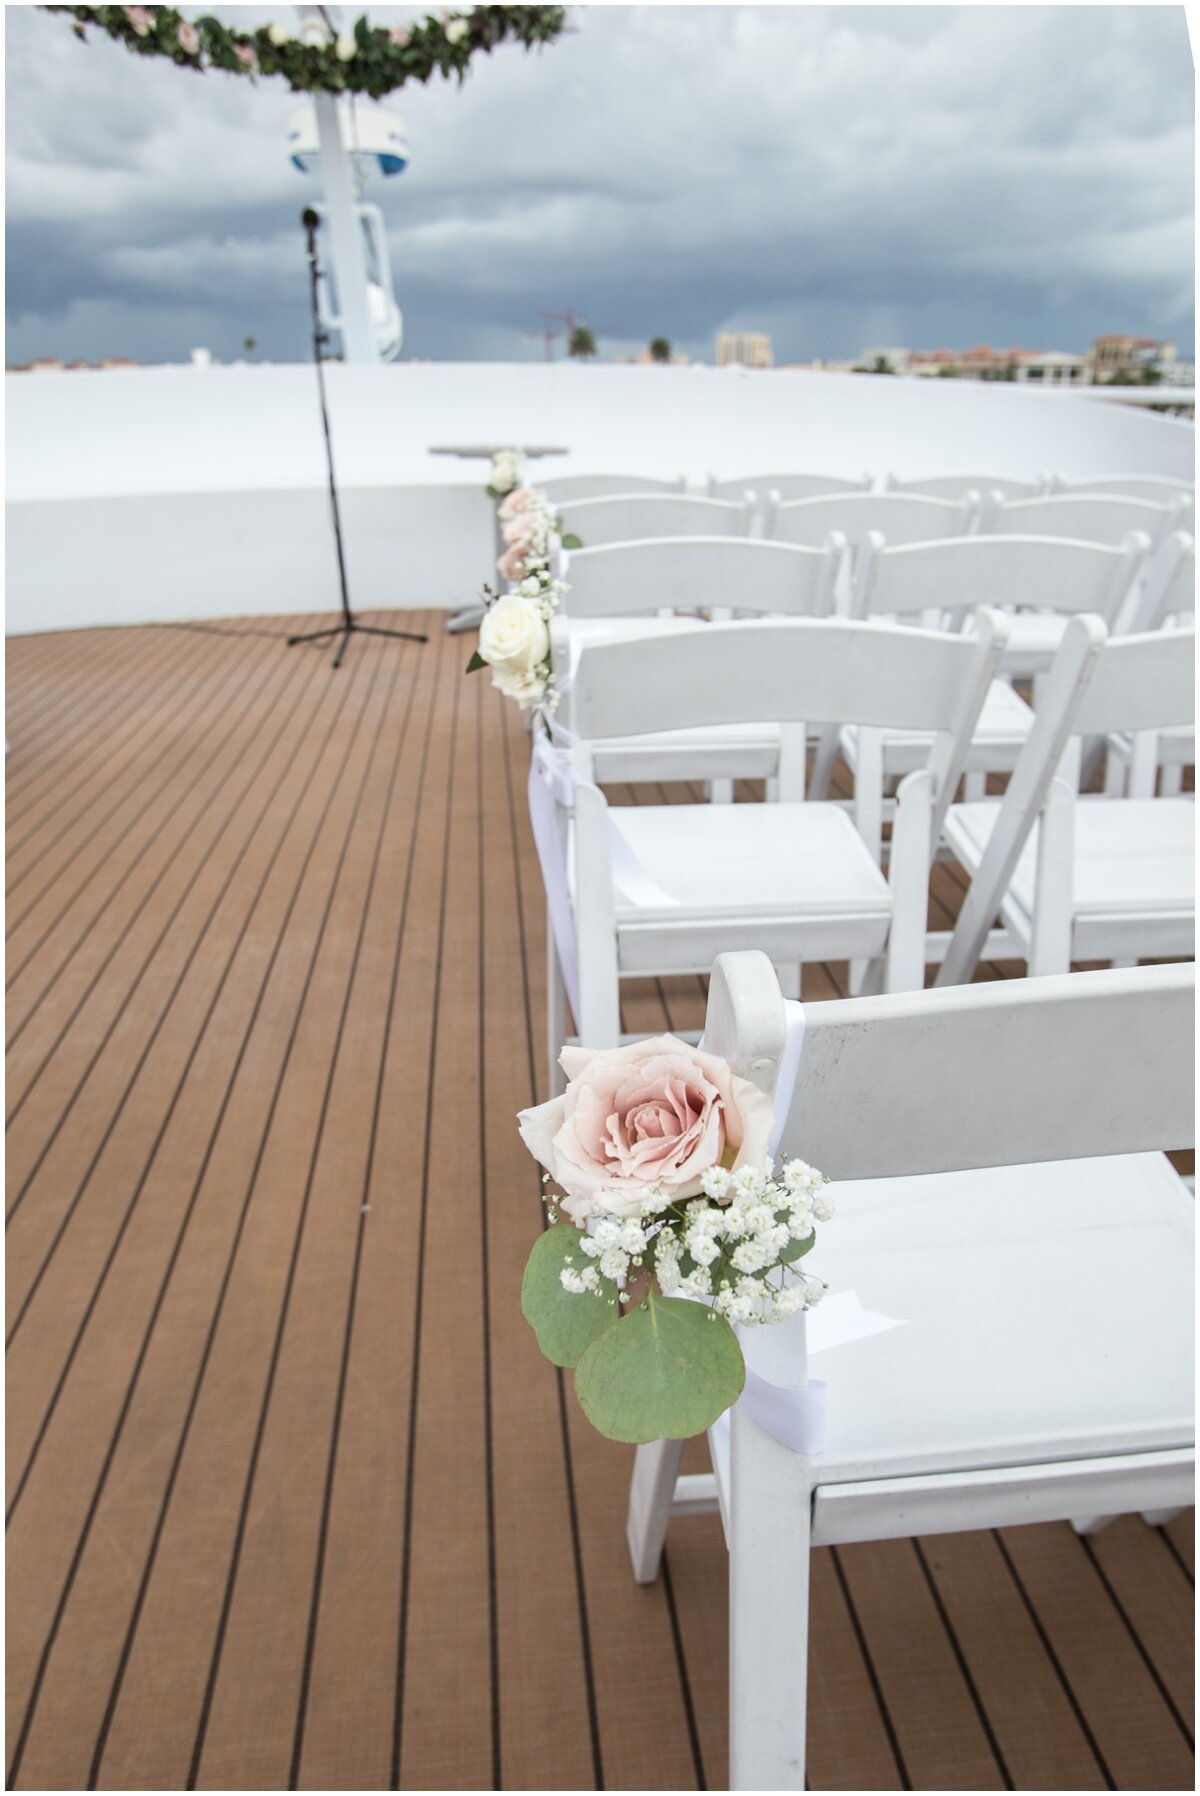  Aisle decor for ceremony on yacht 